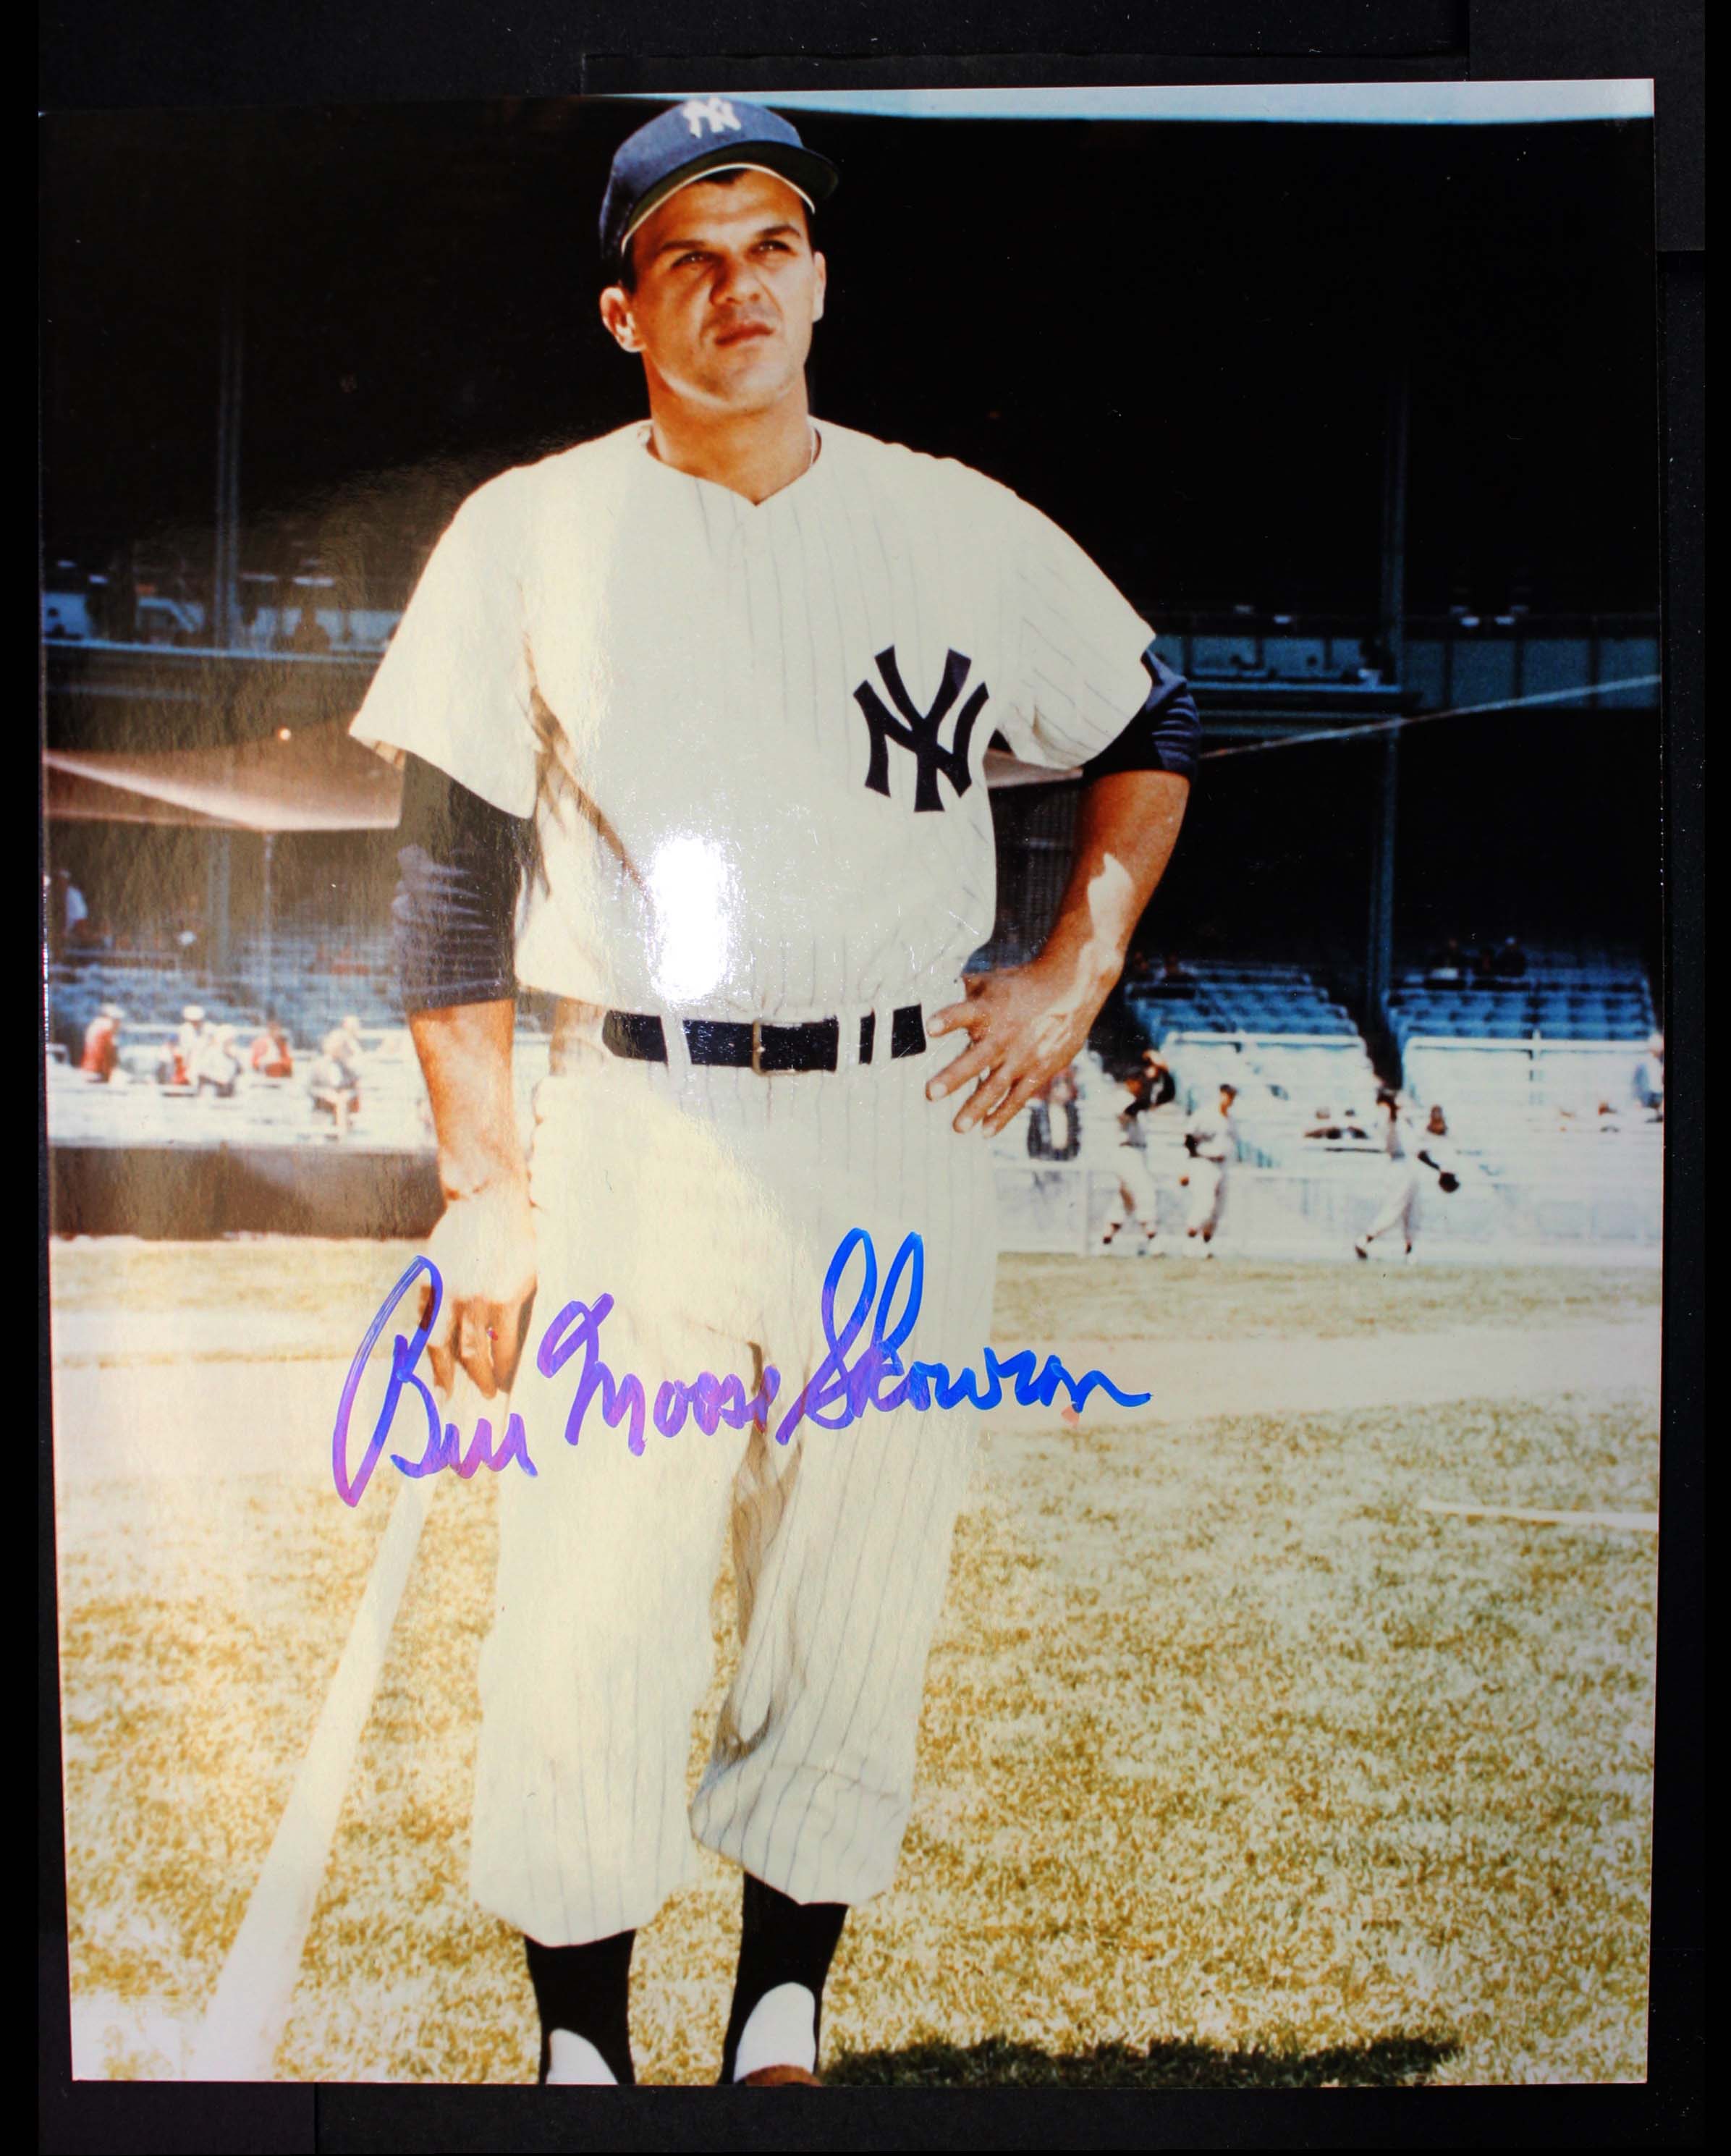    -  Bill "Moose" Skowron 1950s Baseball Autographed 8x10 Photo